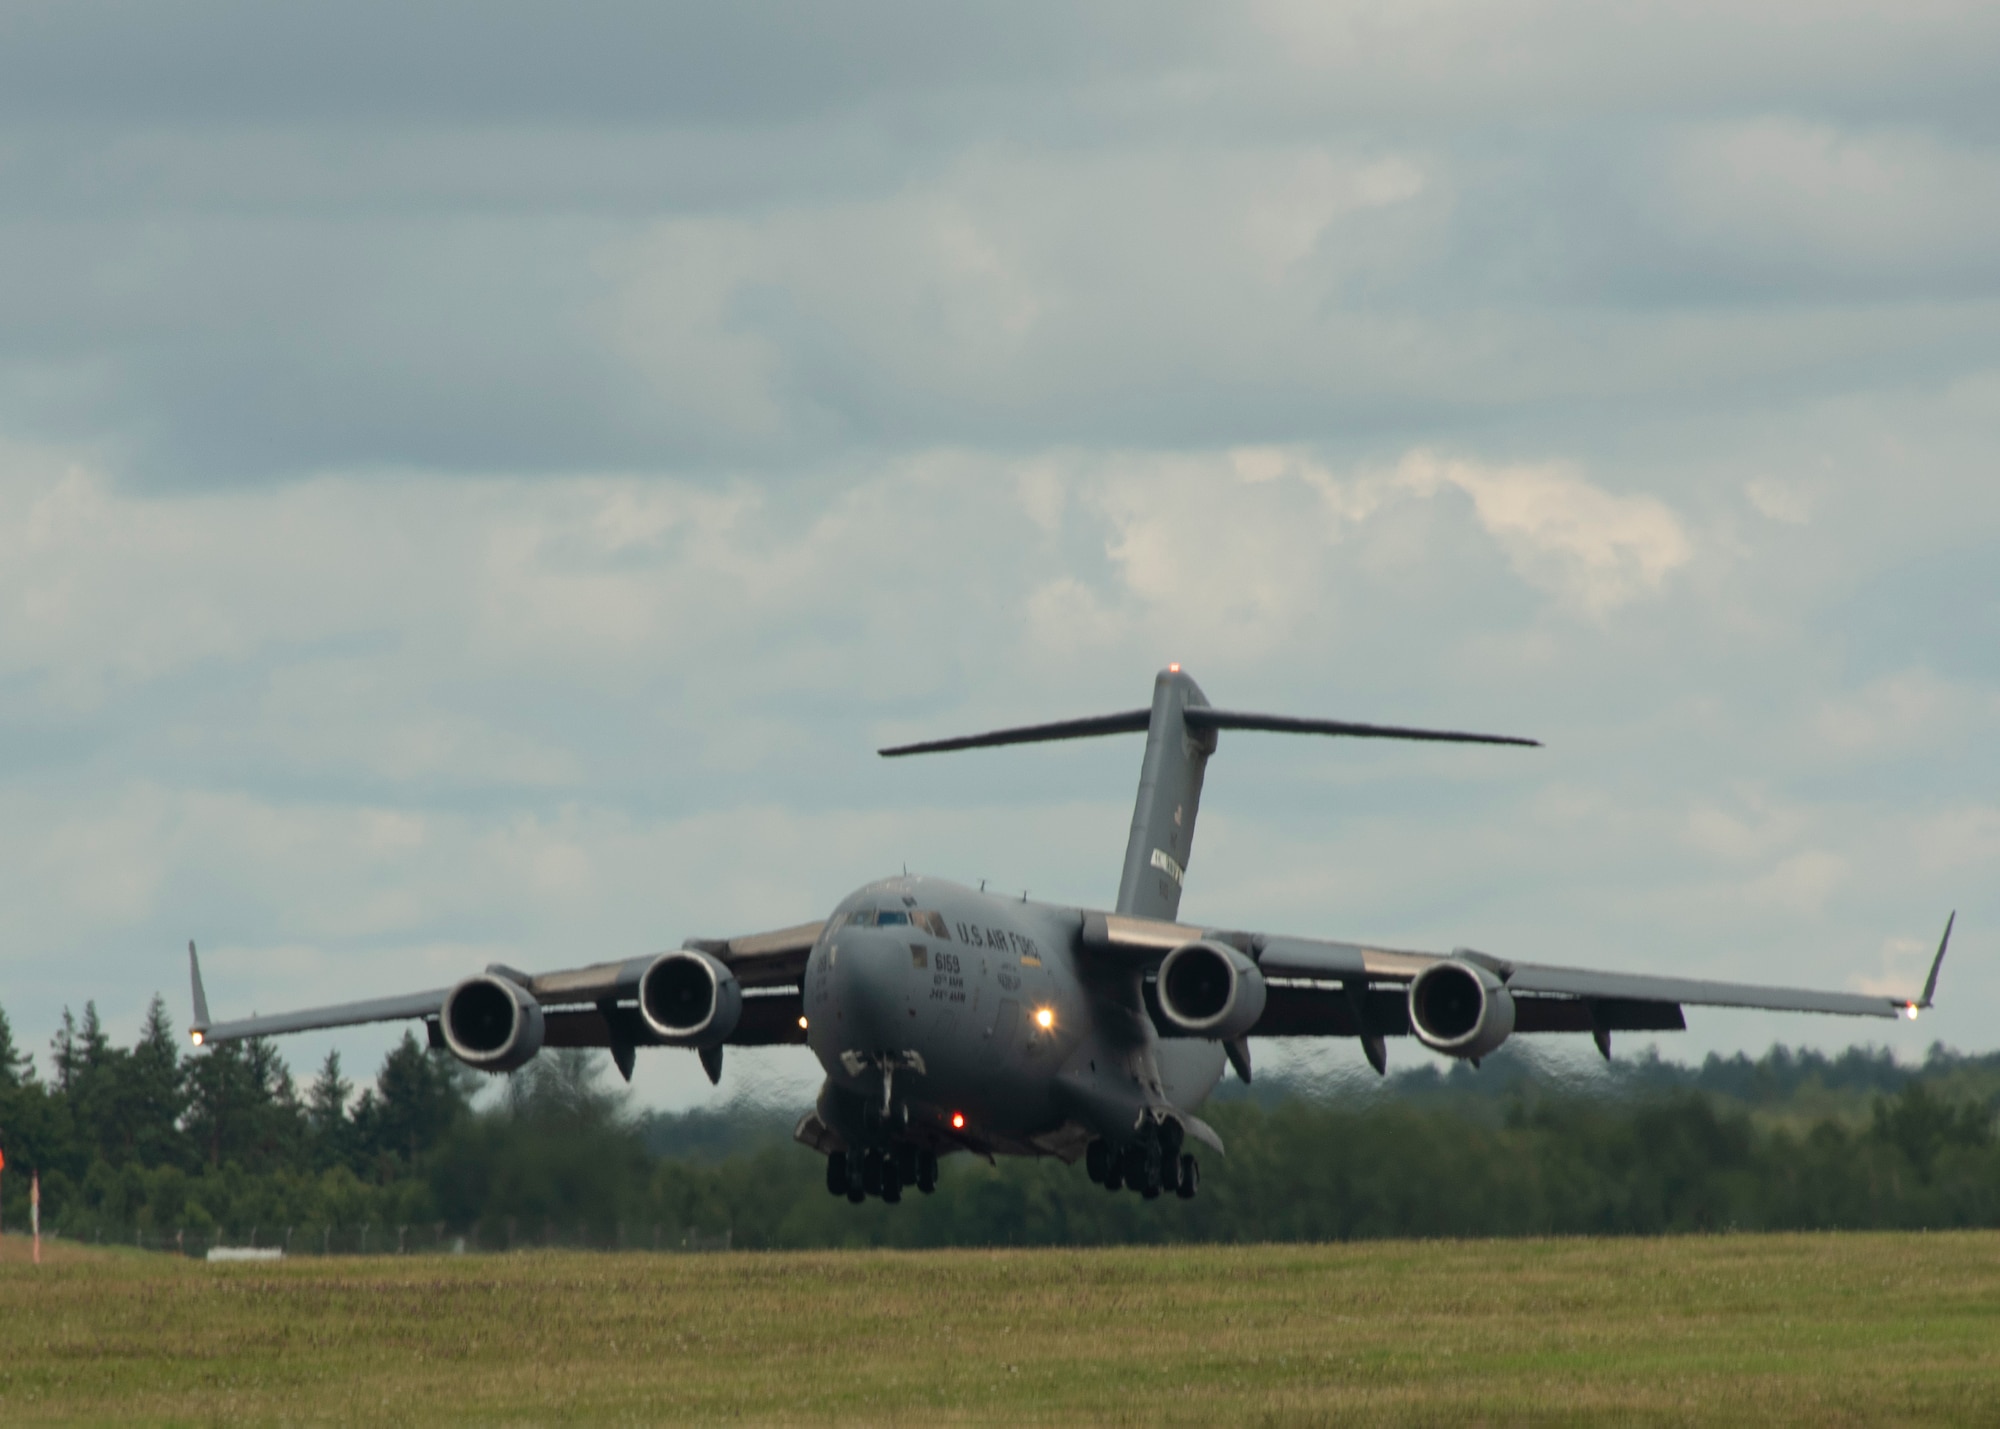 A U.S. Air Force C-17 Globemaster III cargo aircraft lands at Spangdahlem Air Base, Germany, Aug. 5, 2021.